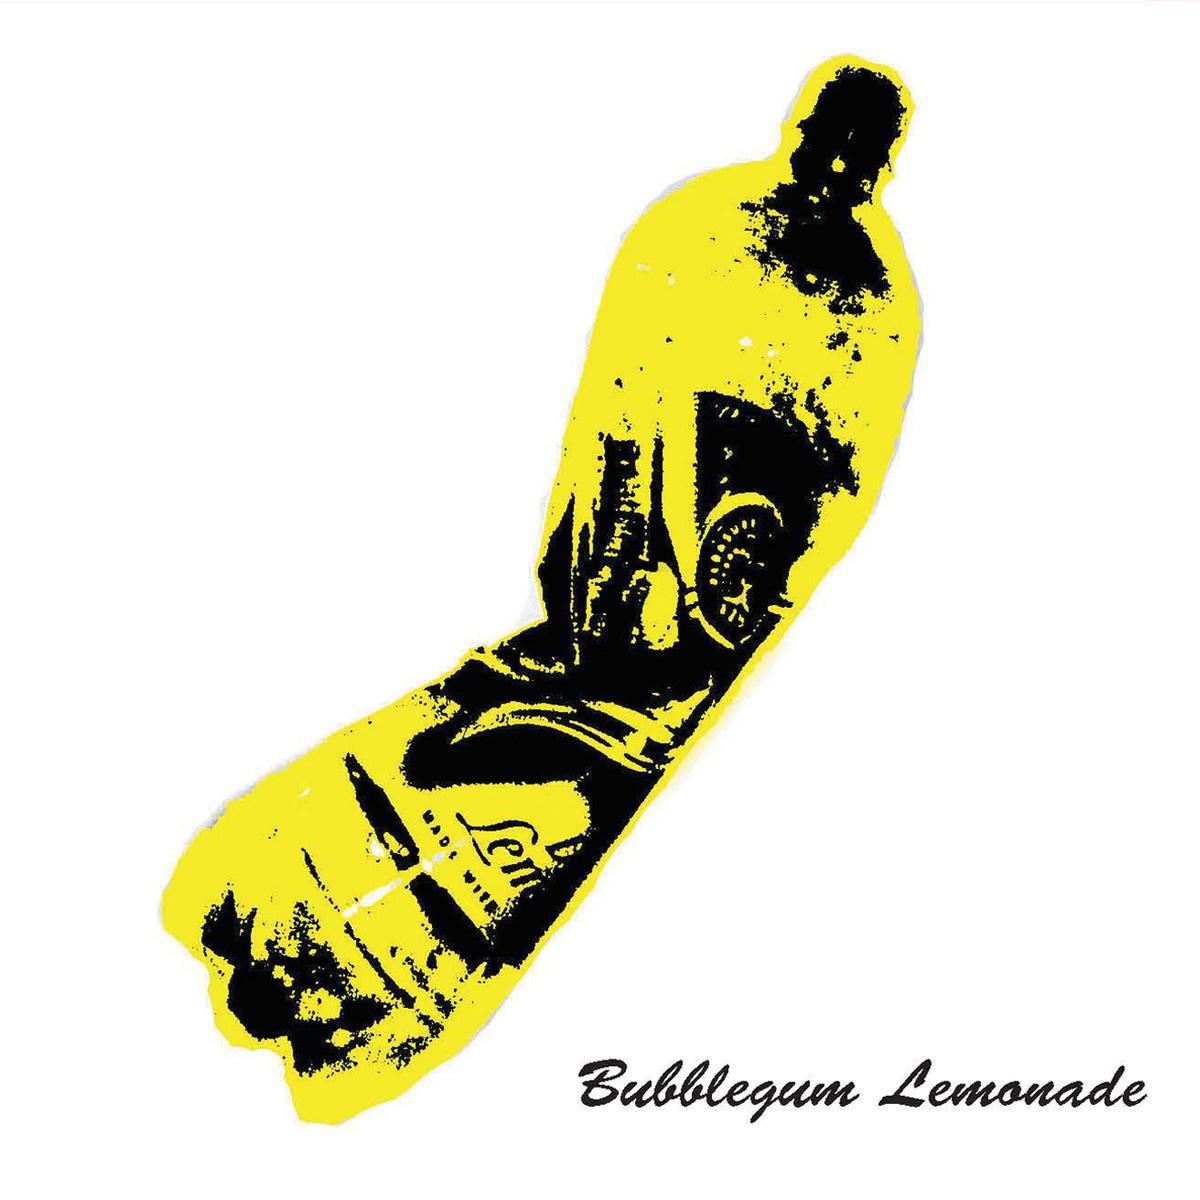 Bubblegum Lemonade - First Rule Of Book Club